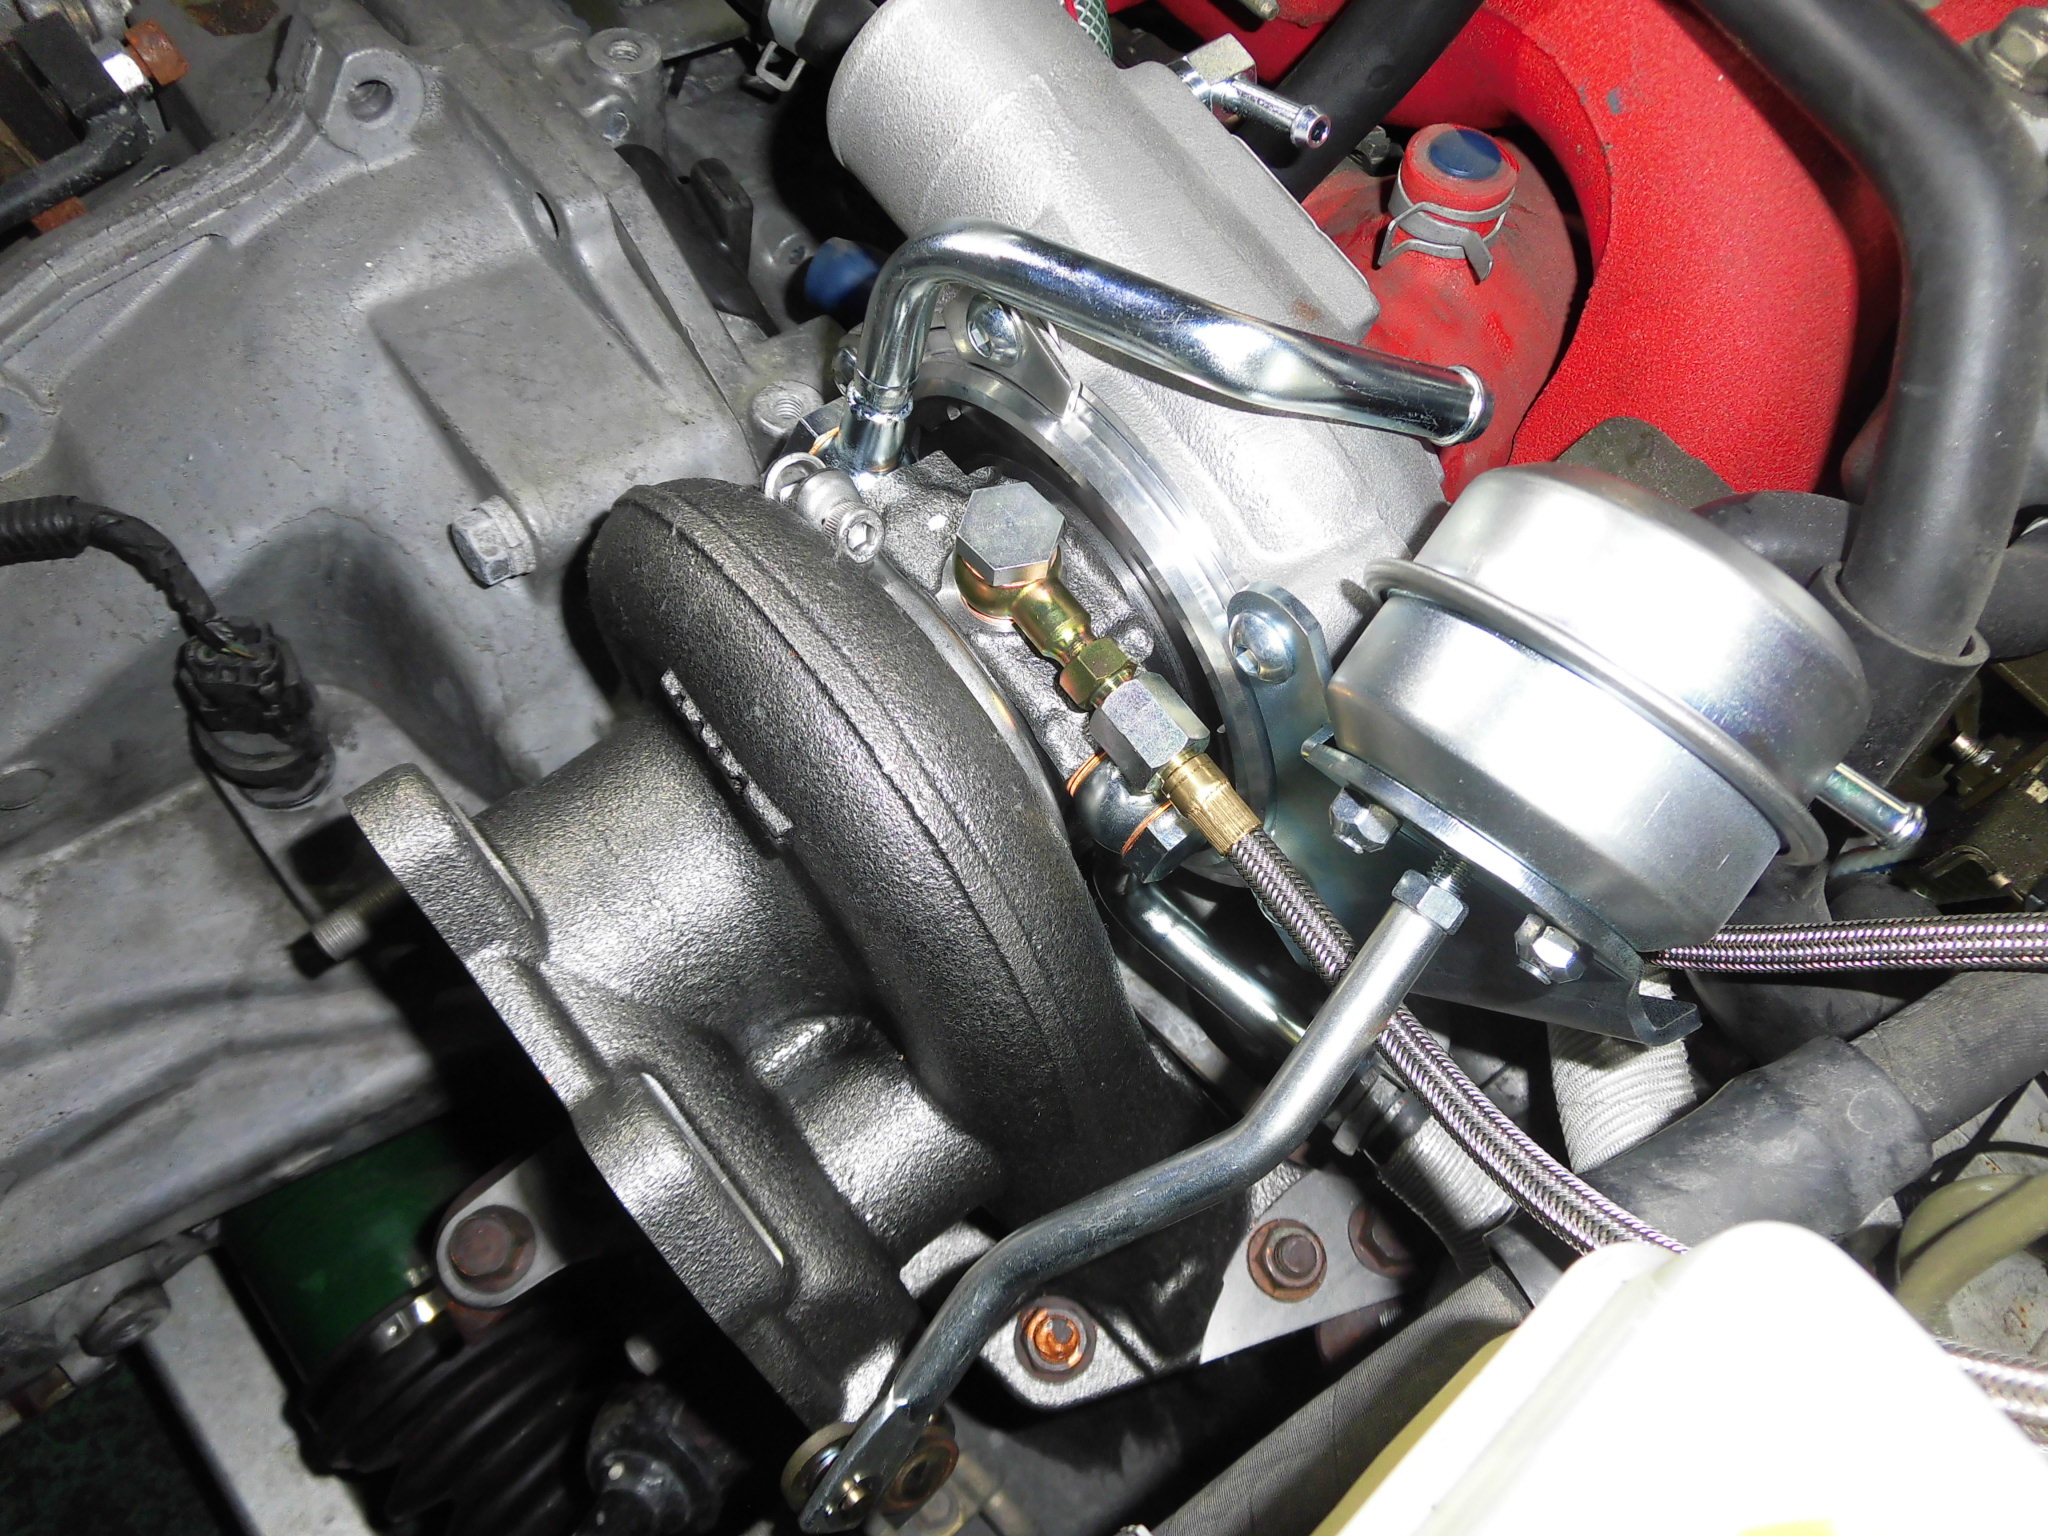 HKS スポーツタービンキット WRX STI (VAB) GTIII-RS  11004-AF013 ターボ ブーストアップ チューンナップ 過給器 - 4